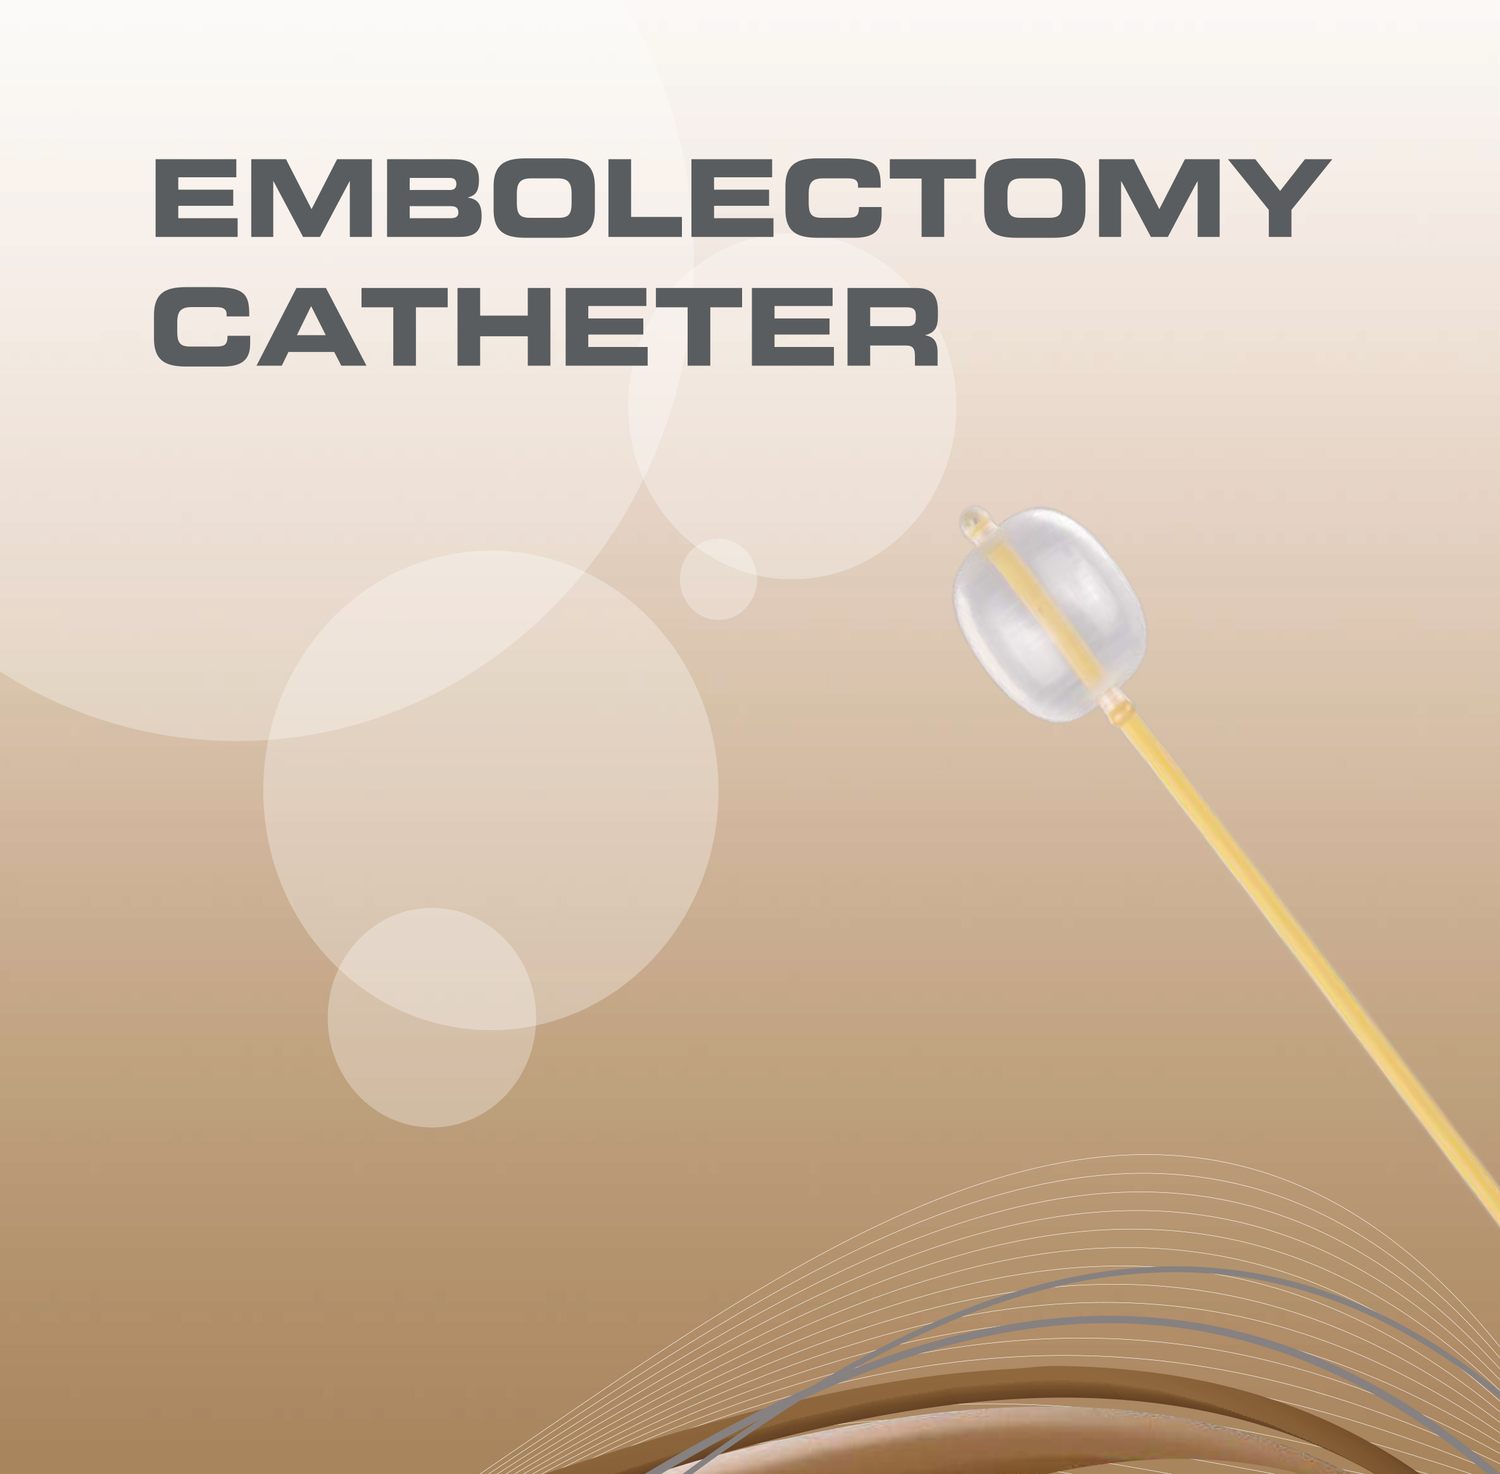 Embolectomy Catheter Czech Republic medical market medical equipment, tools, components interventional cardiology, radiology, angiology, arrhythmology, electrophysiology and neurophysiology